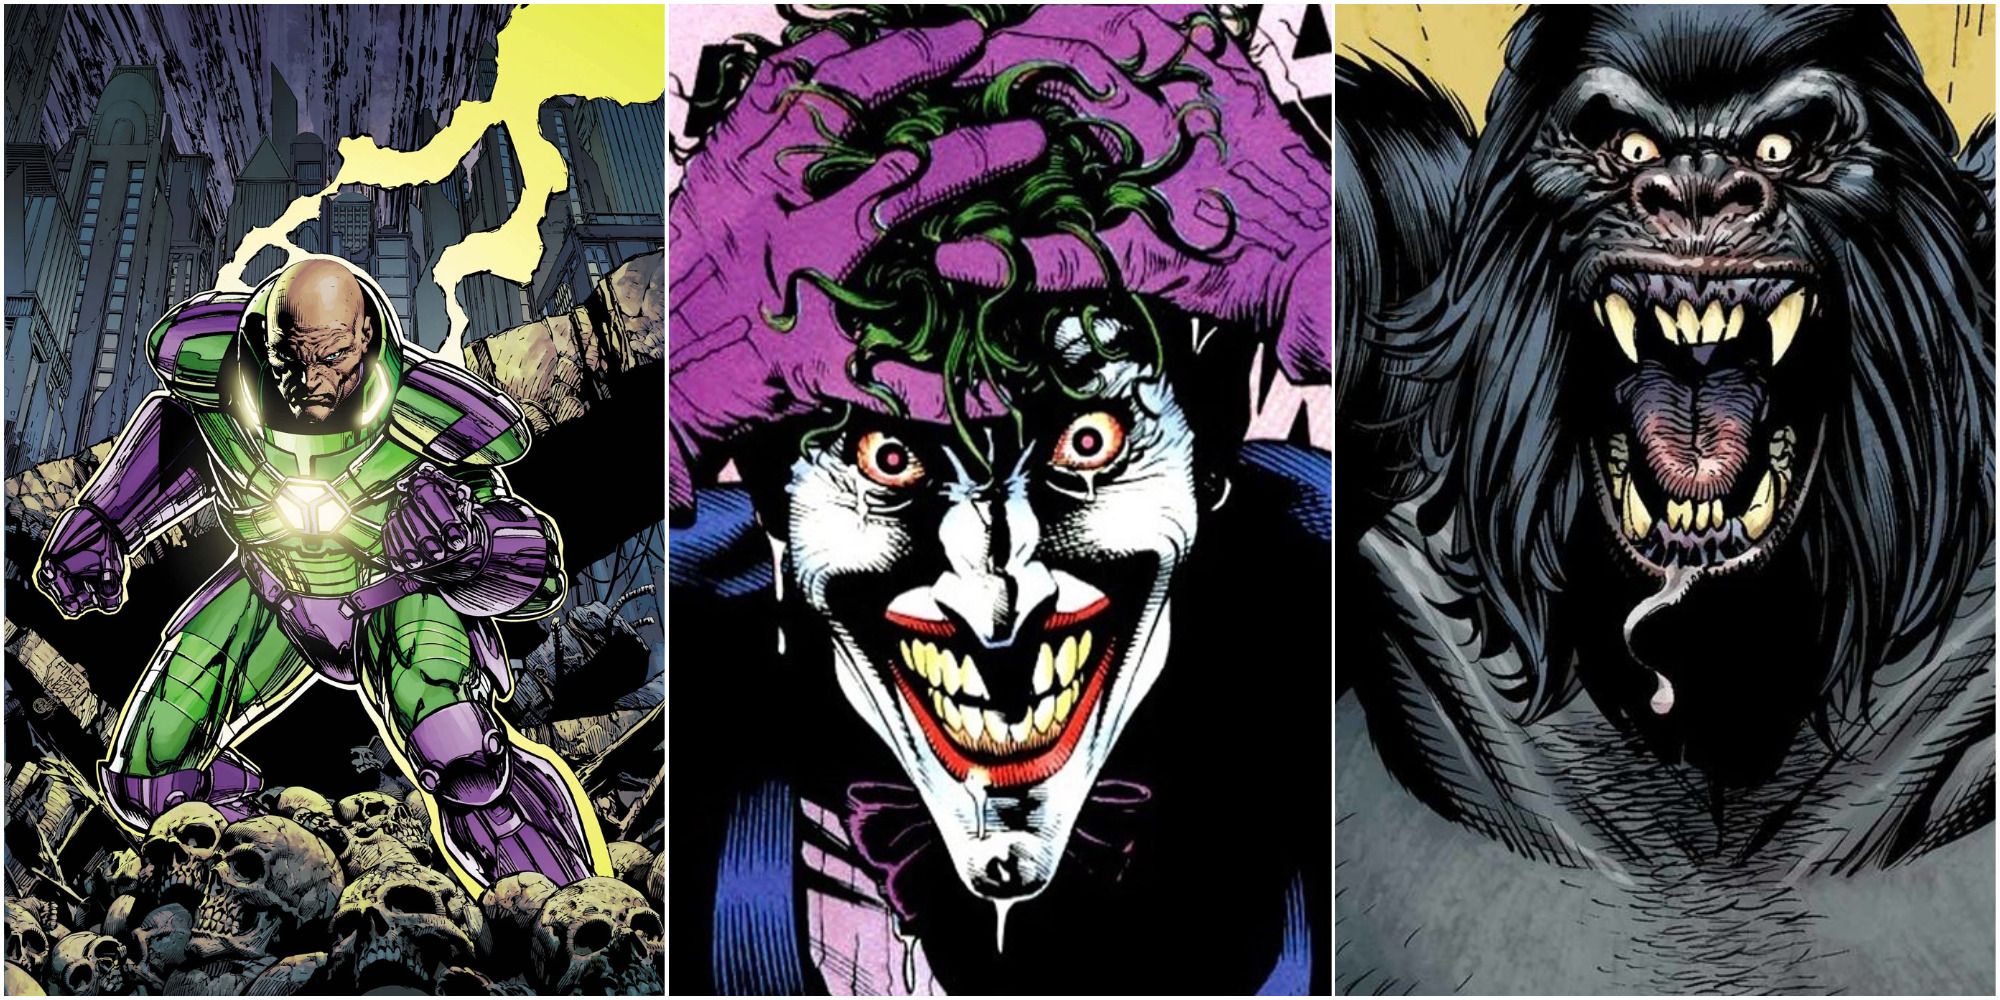 Lex Luthor, Joker, and Gorilla Grodd